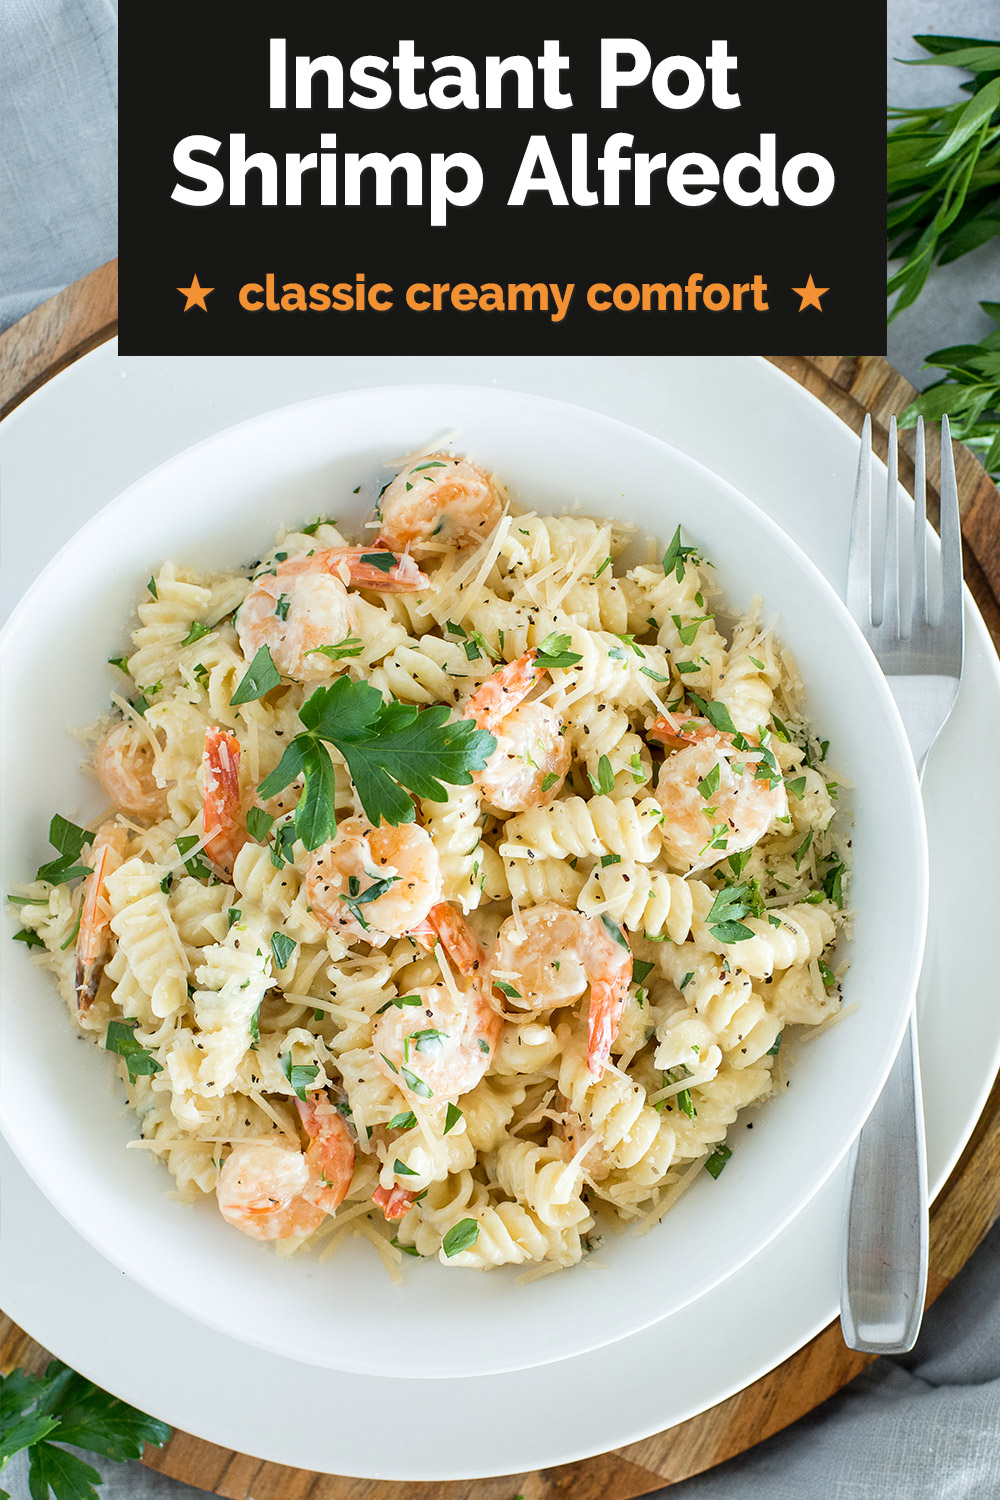 pinterest image for instant pot shrimp alfredo, with parmesan and cream sauce via @PressureCook2da